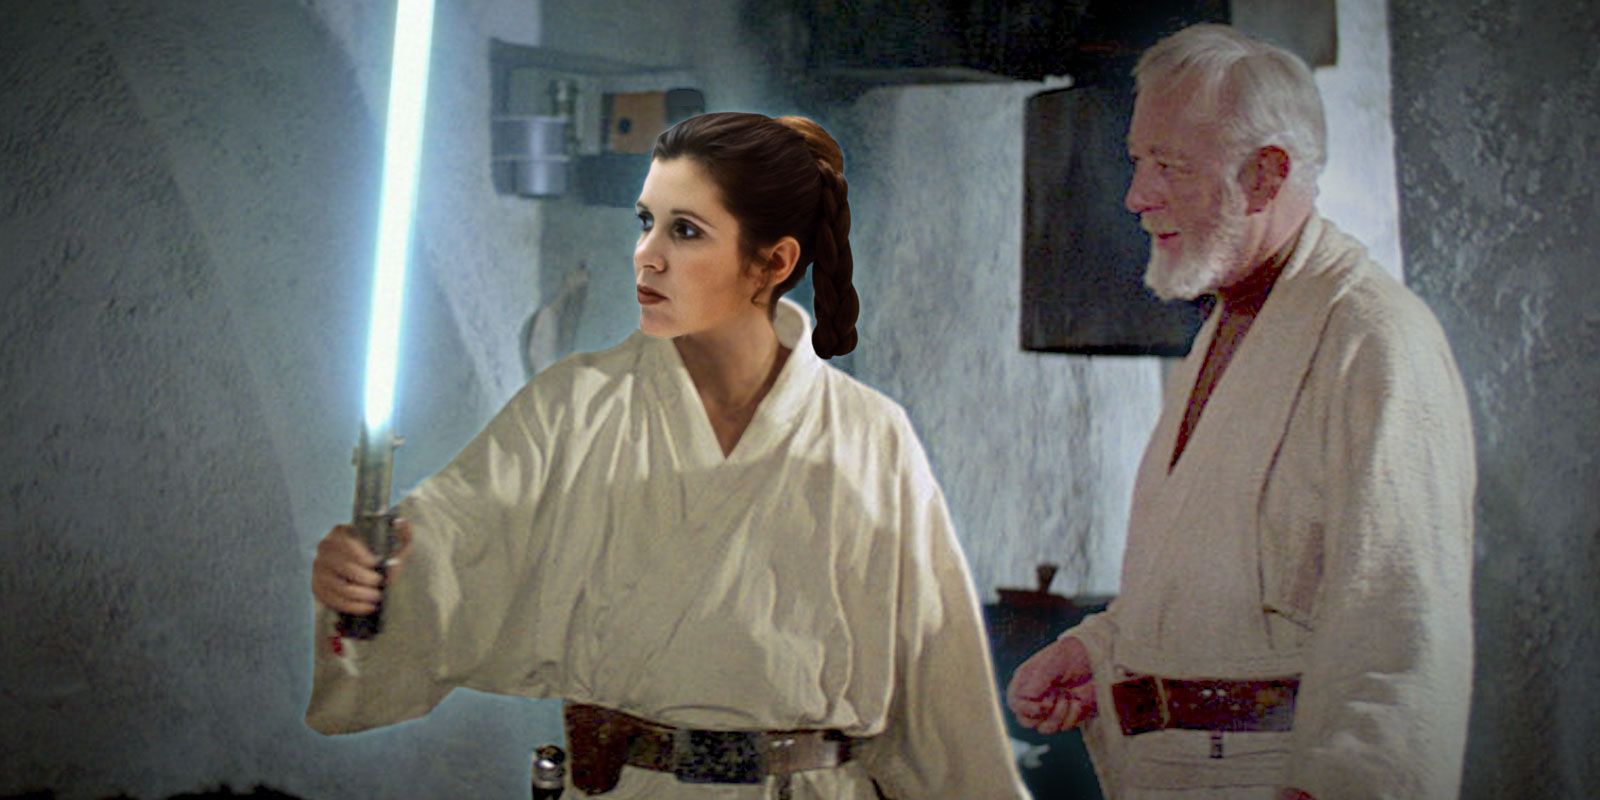 Leia Skywalker being given Anakin's lightsaber by Obi-Wan Kenobi.